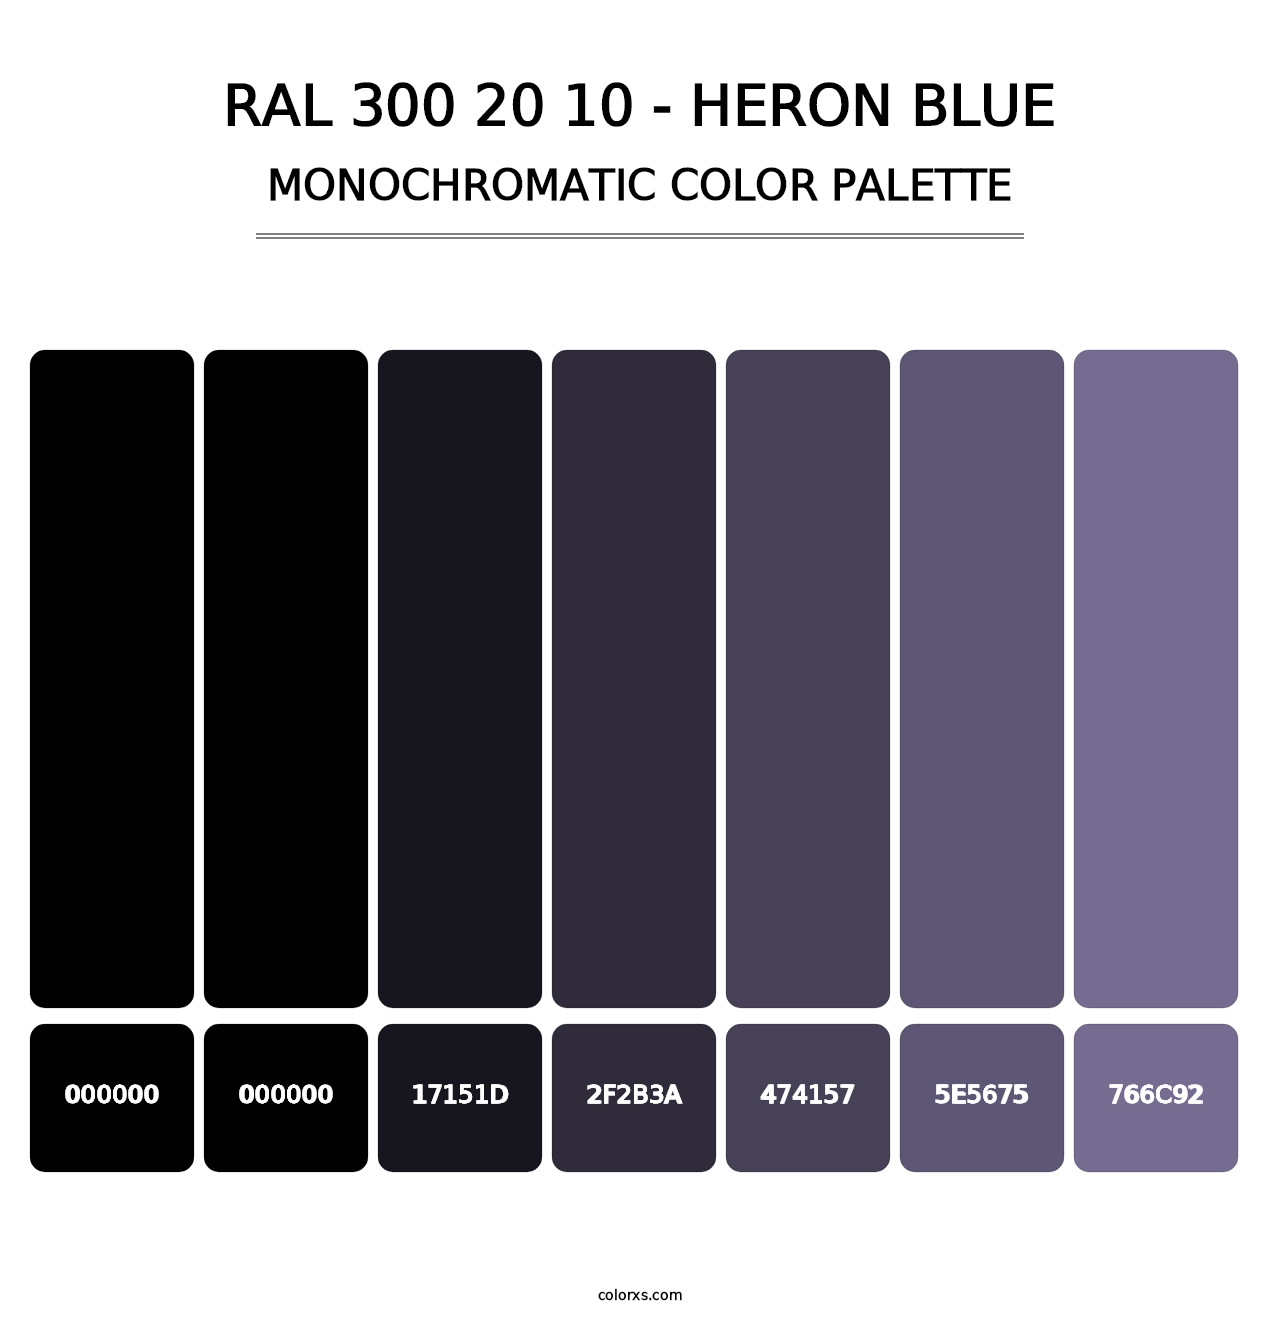 RAL 300 20 10 - Heron Blue - Monochromatic Color Palette